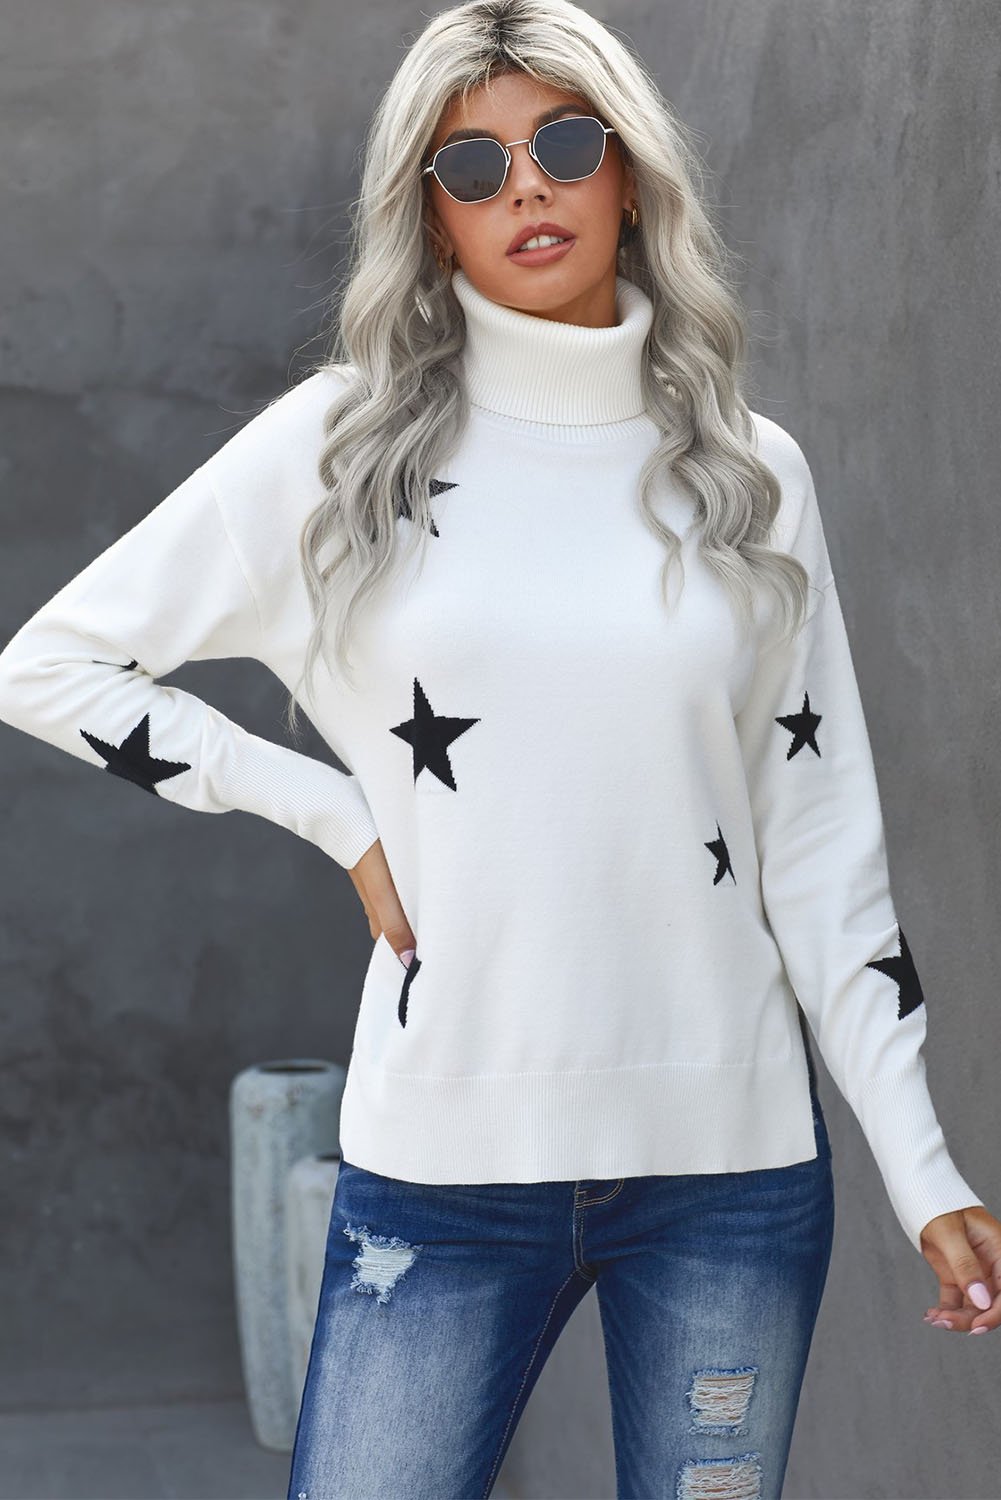 Winter White Turtleneck Dropped Sleeve Star Print Sweater